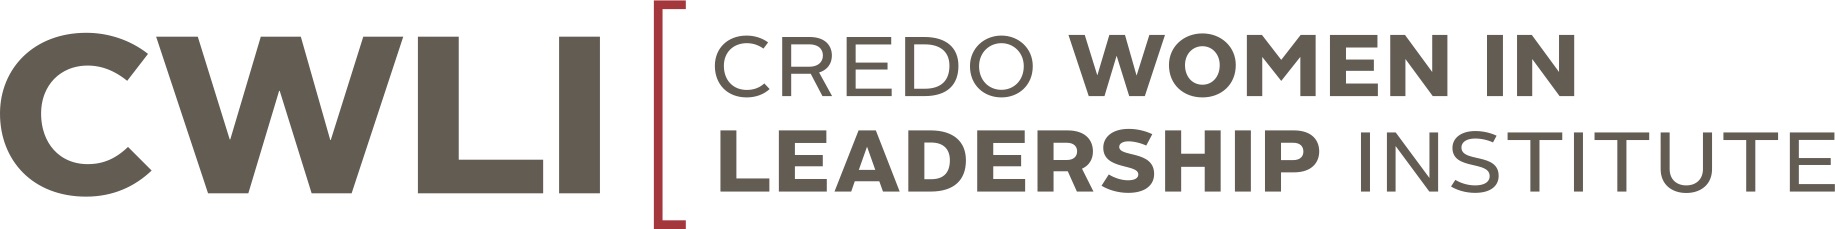 Credo Women in Leadership Institute Header Image